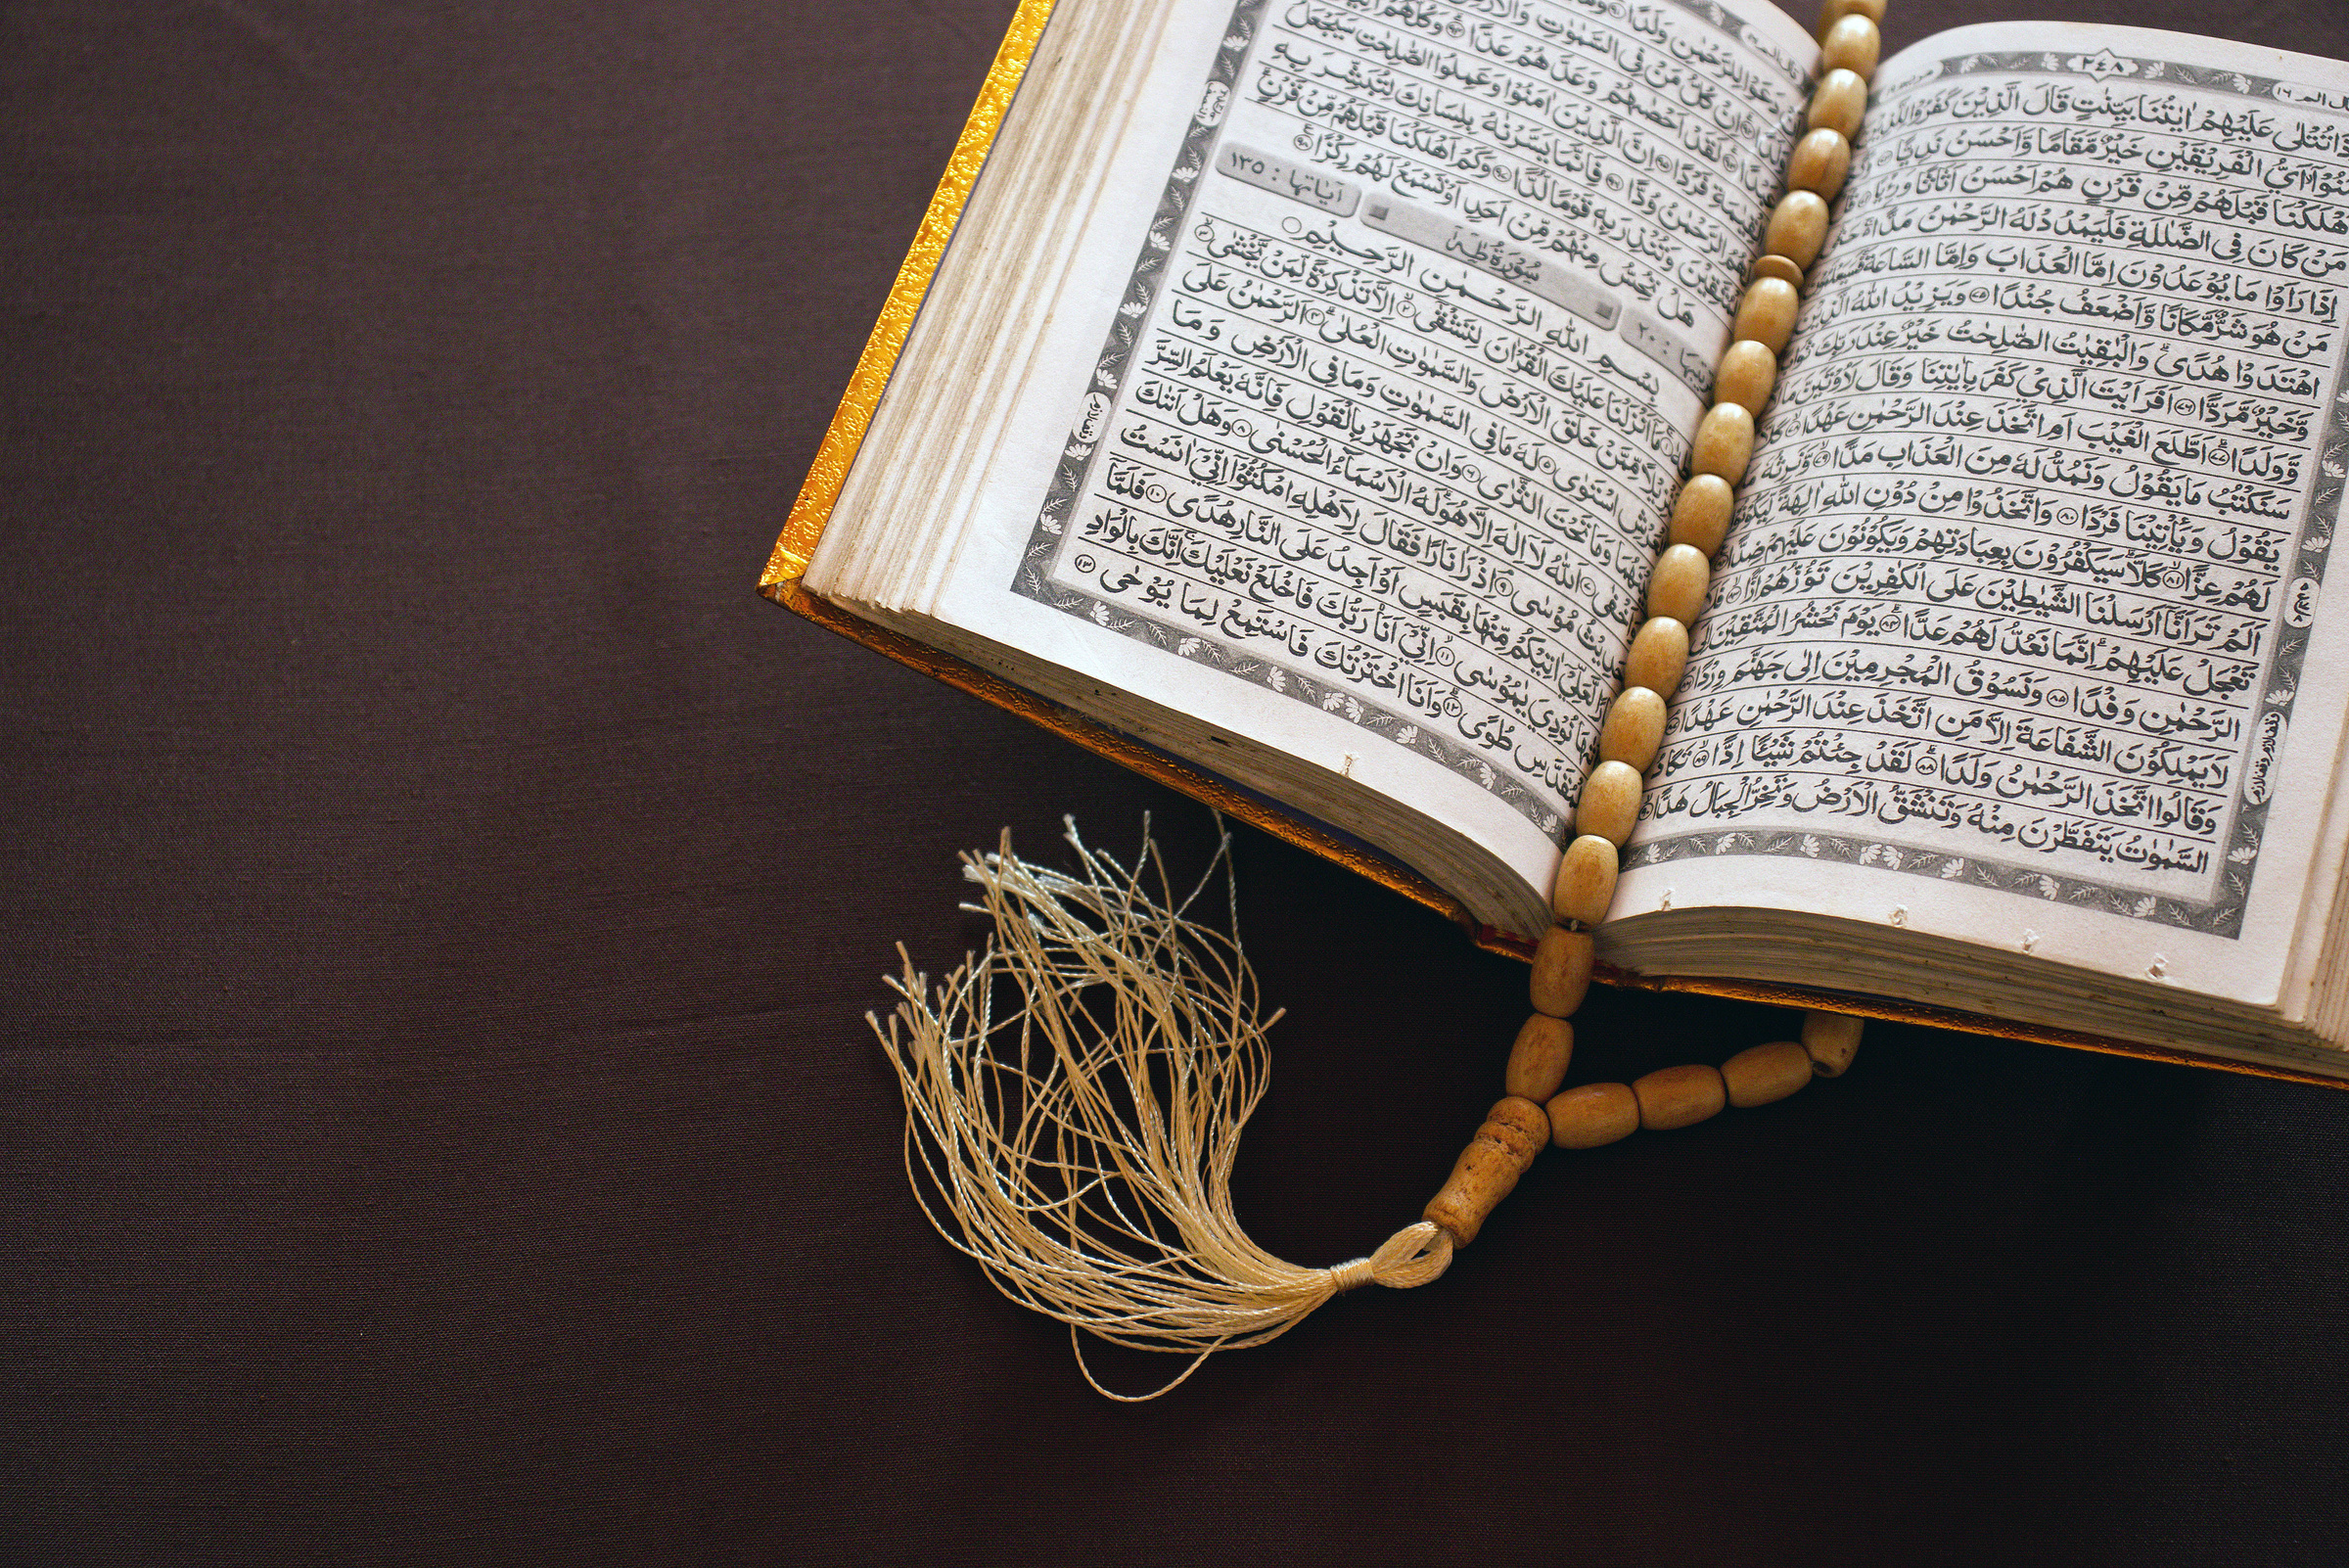 Quran - Religious Text Of Islam